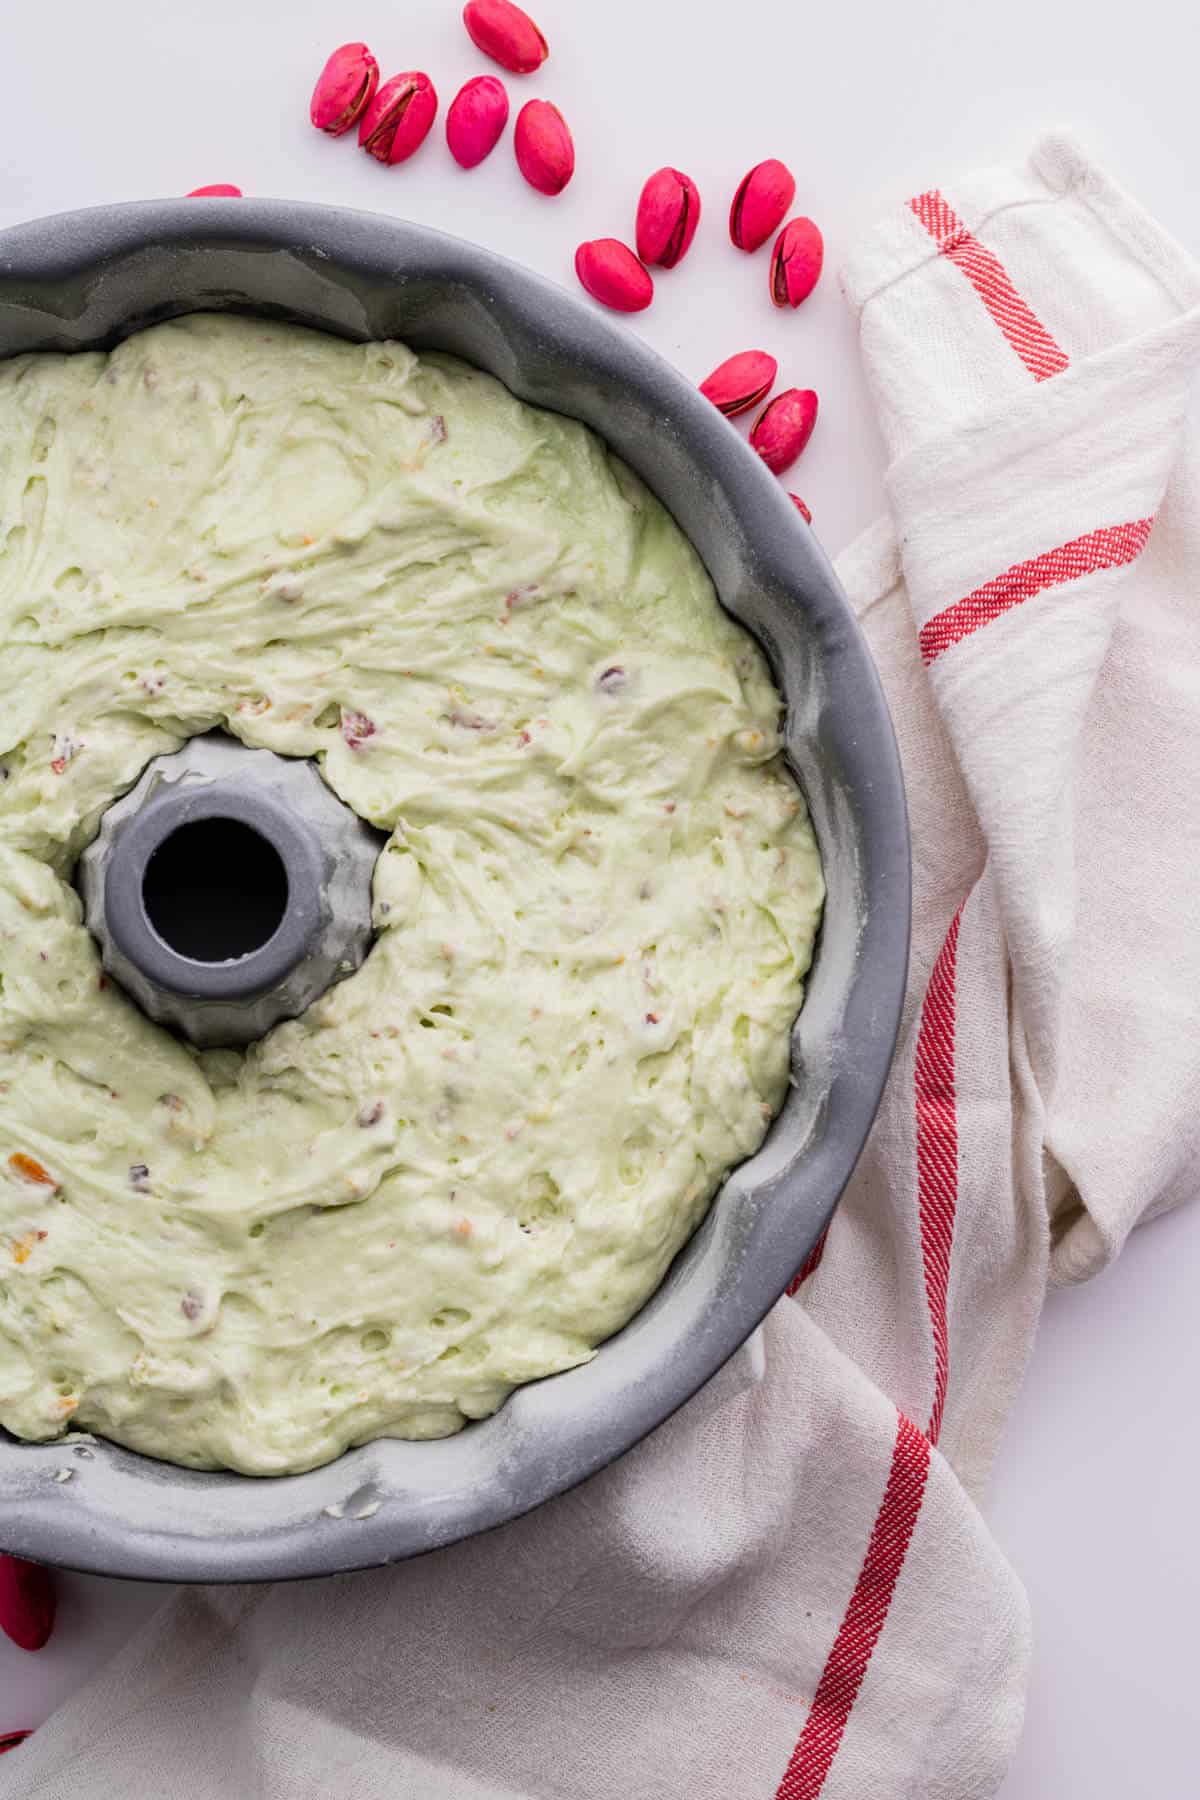 A bundt cake pan filled with green batter. 